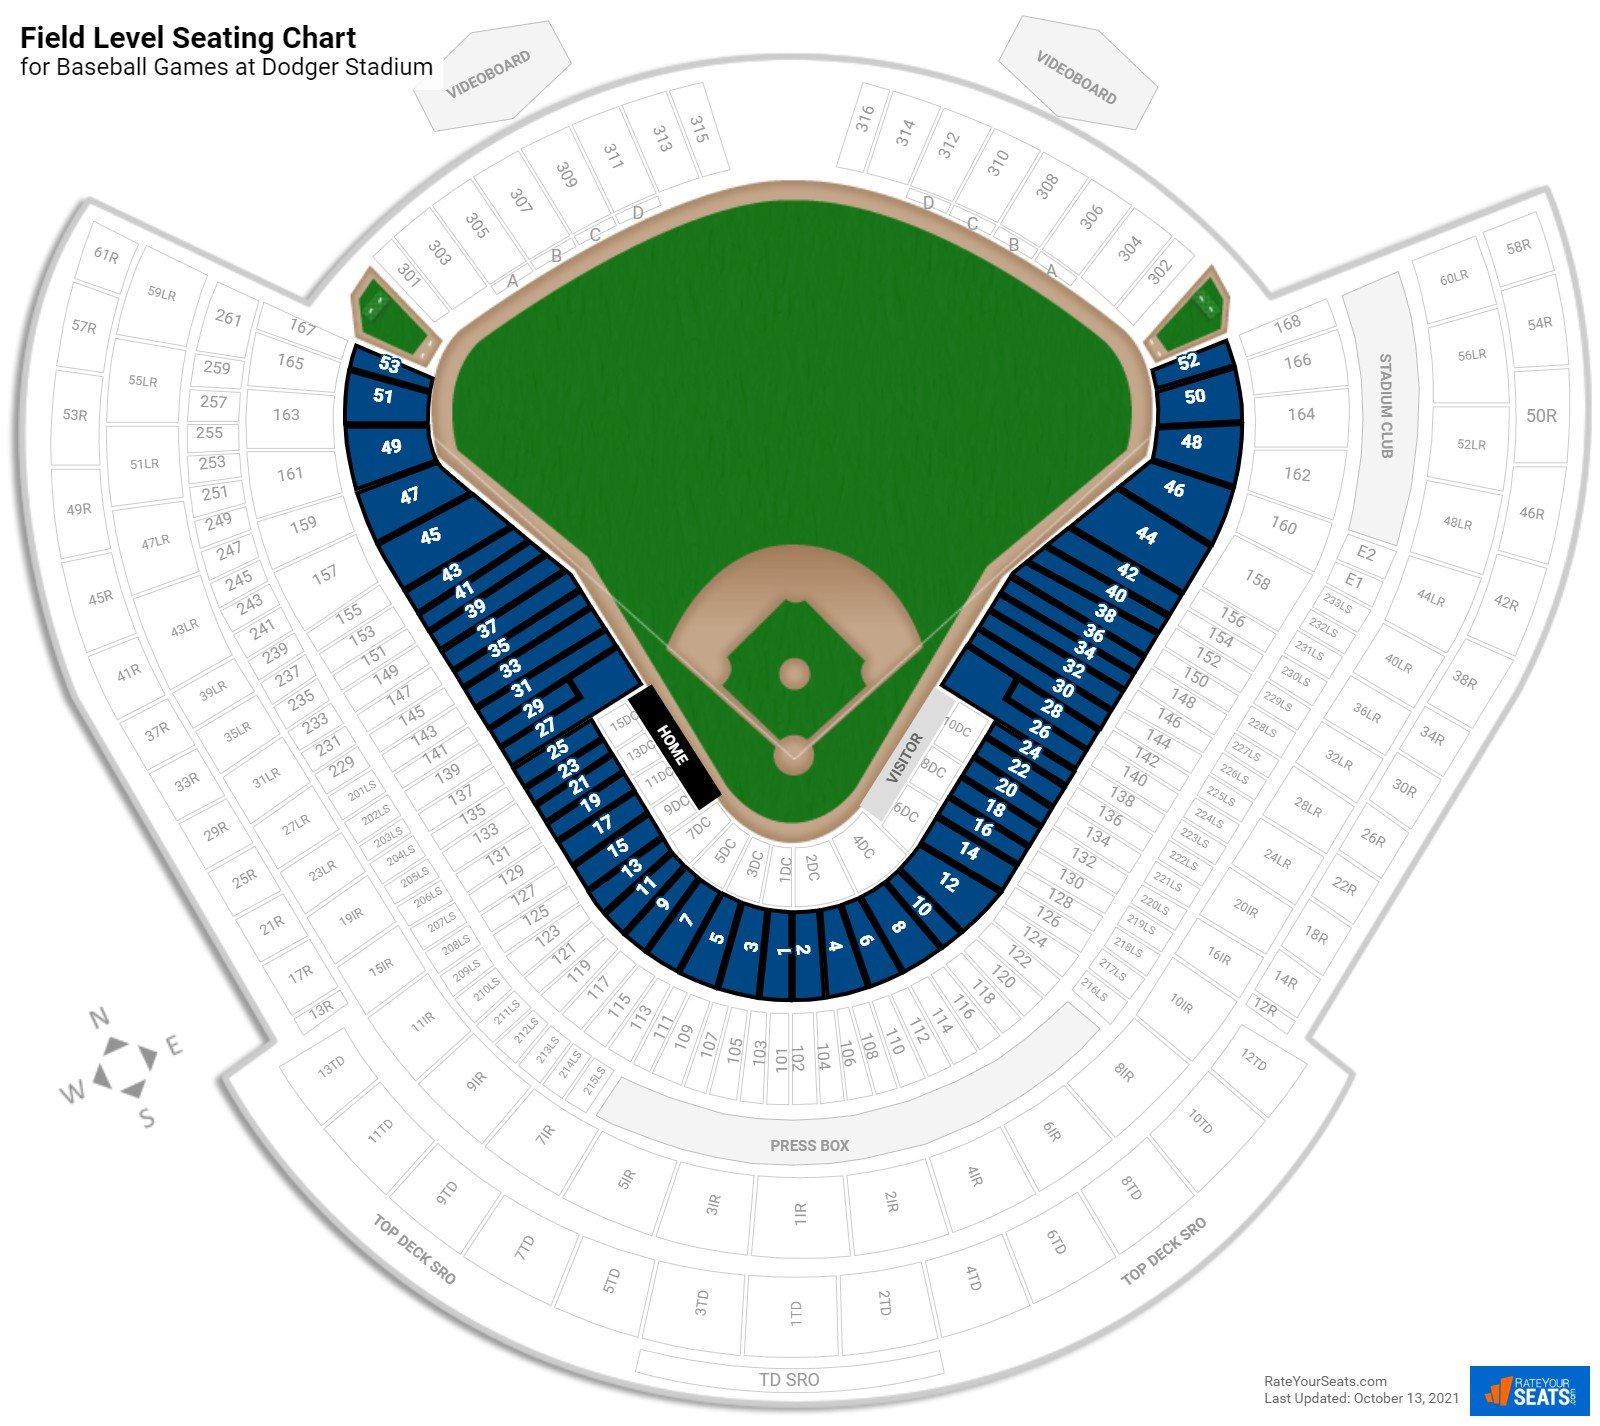 Stadium Seating Chart  Dodgers, Dodger stadium, Seating charts